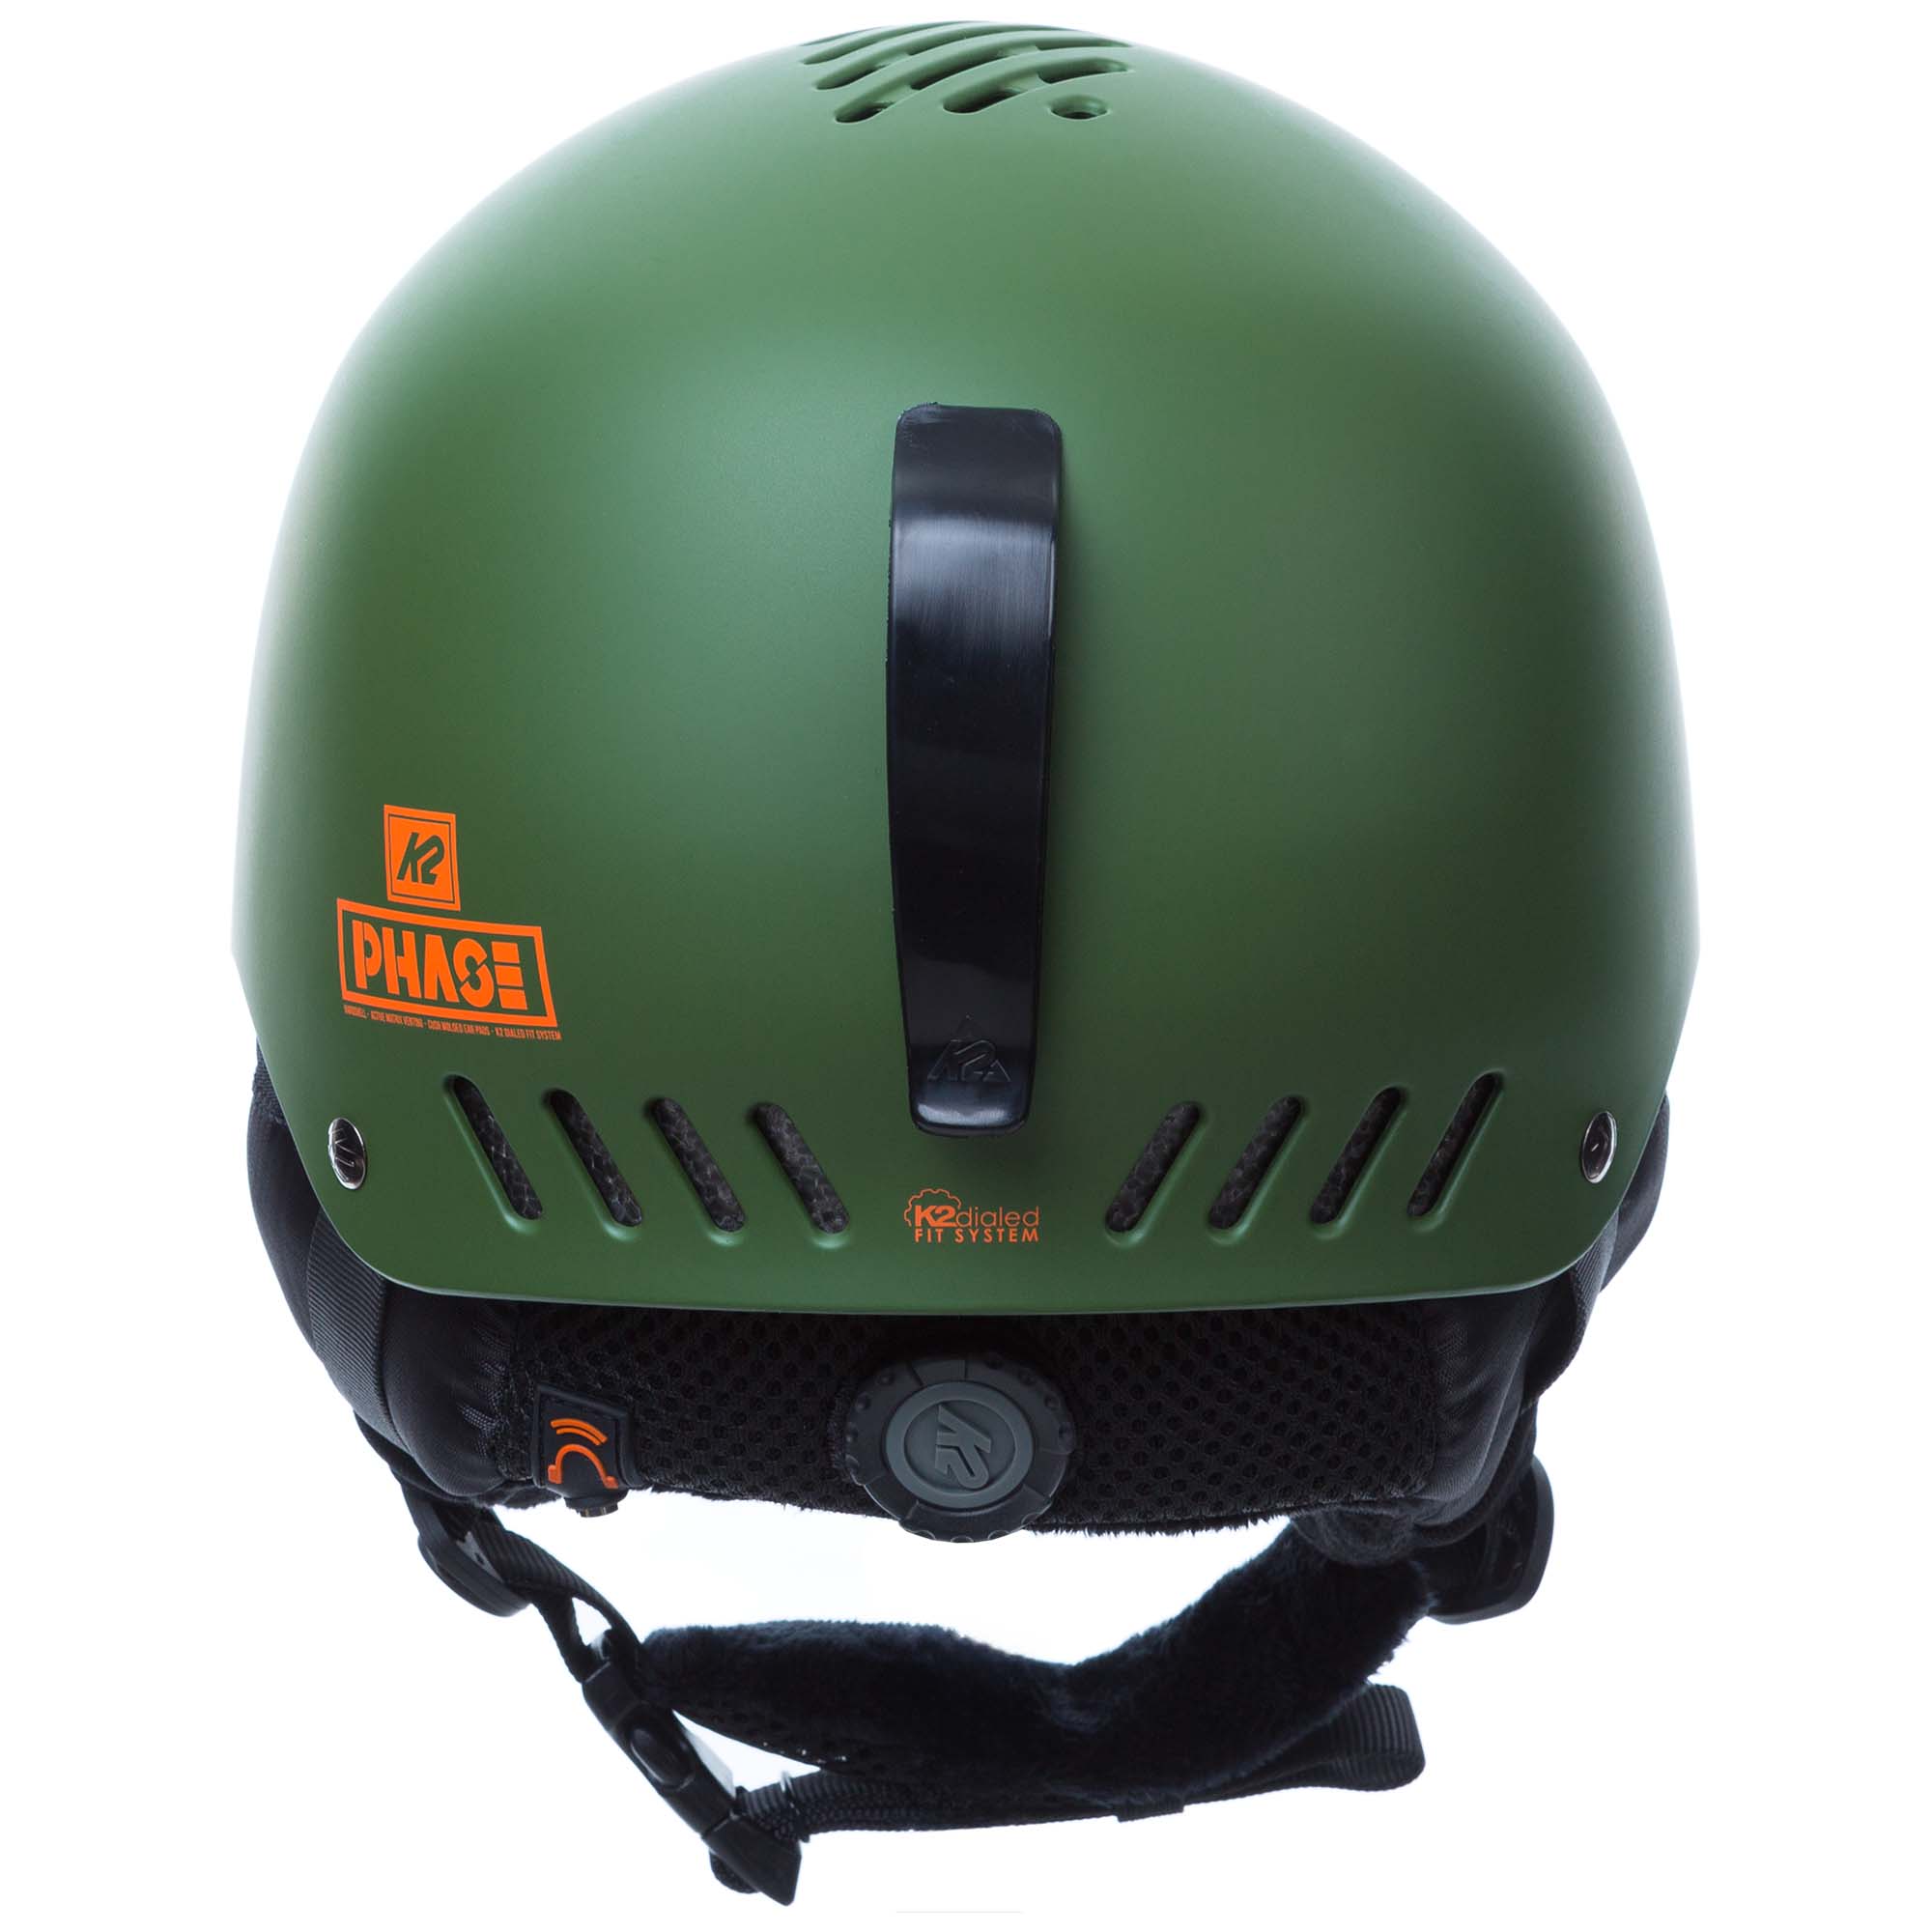 K2 Phase Pro - Ski helmet, Free EU Delivery